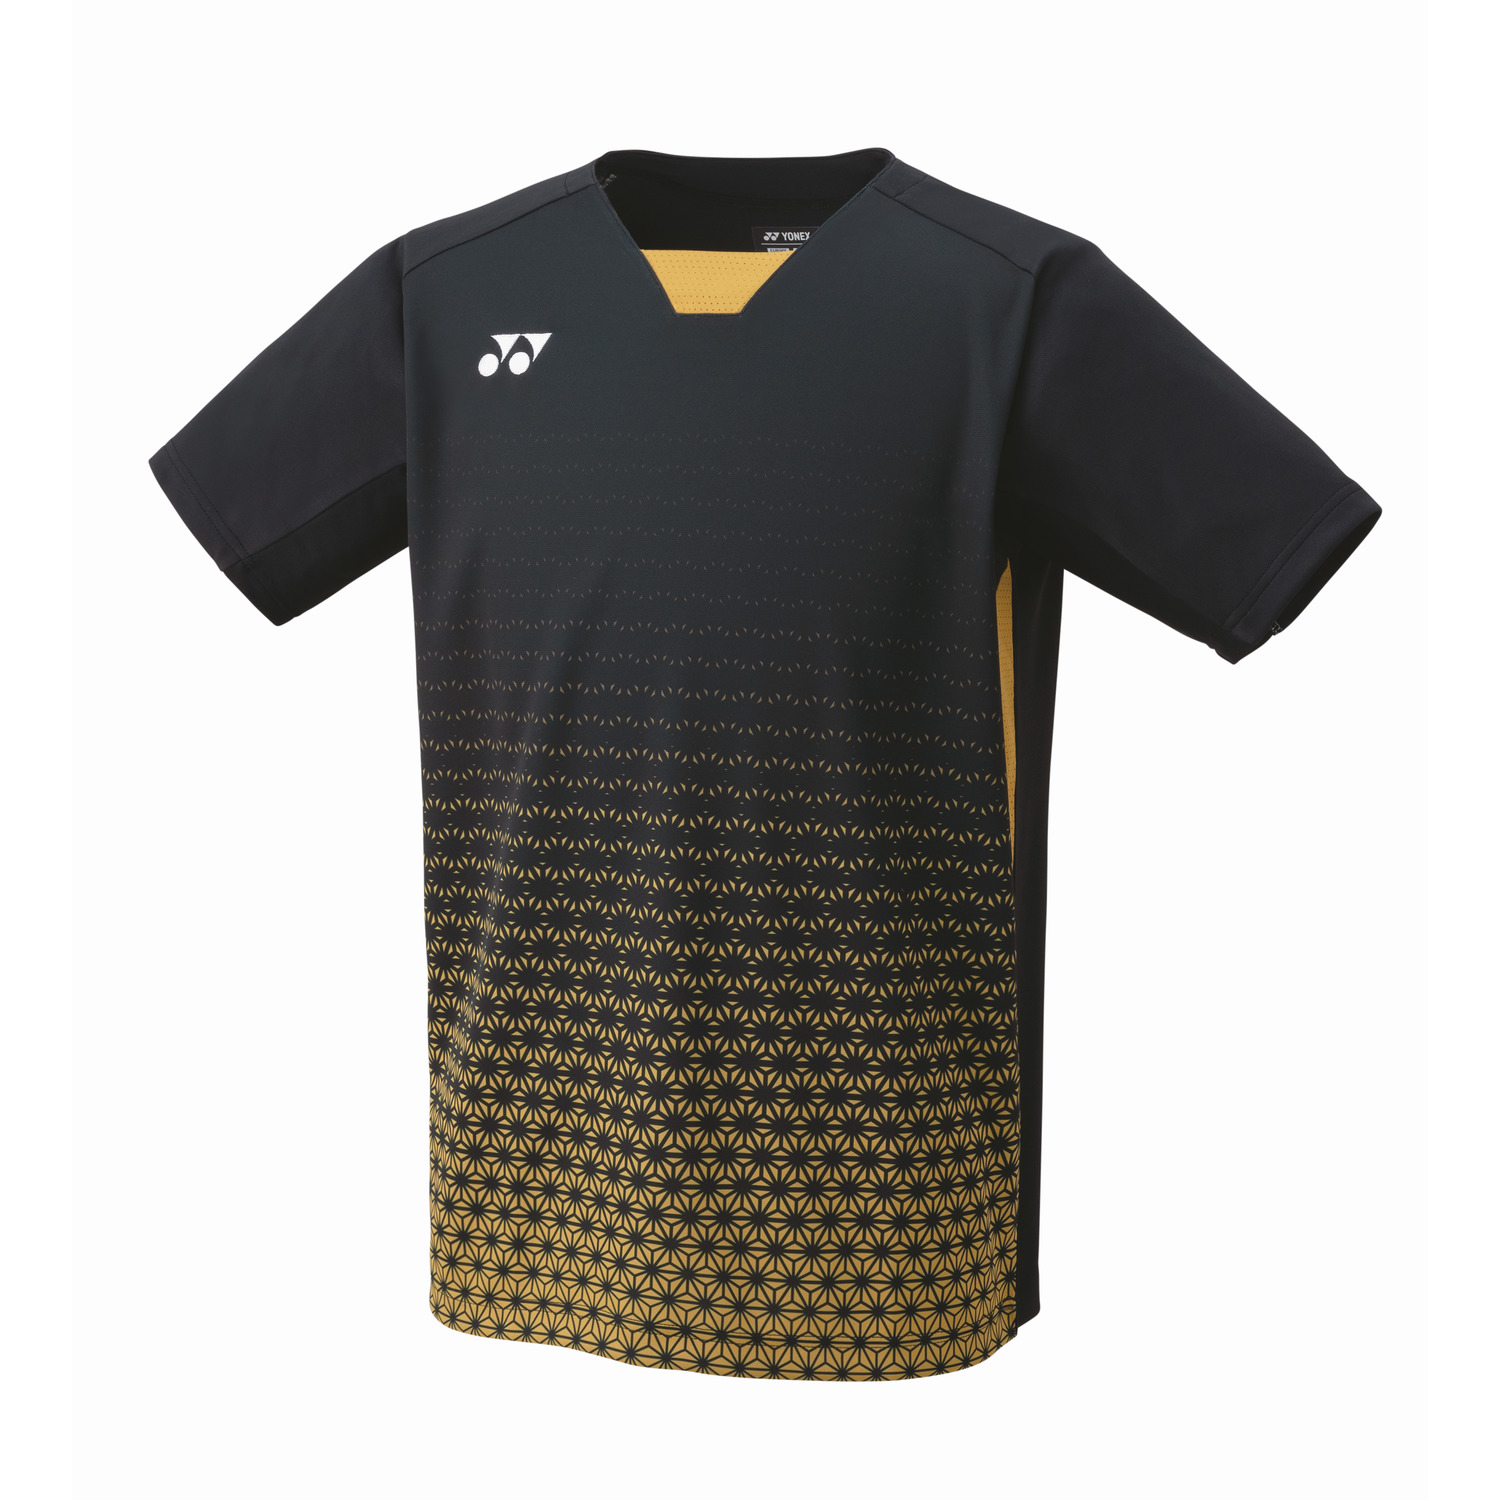 Yonex Japan National Badminton/ Sports Shirt 10615EX Black/ Gold MEN'S